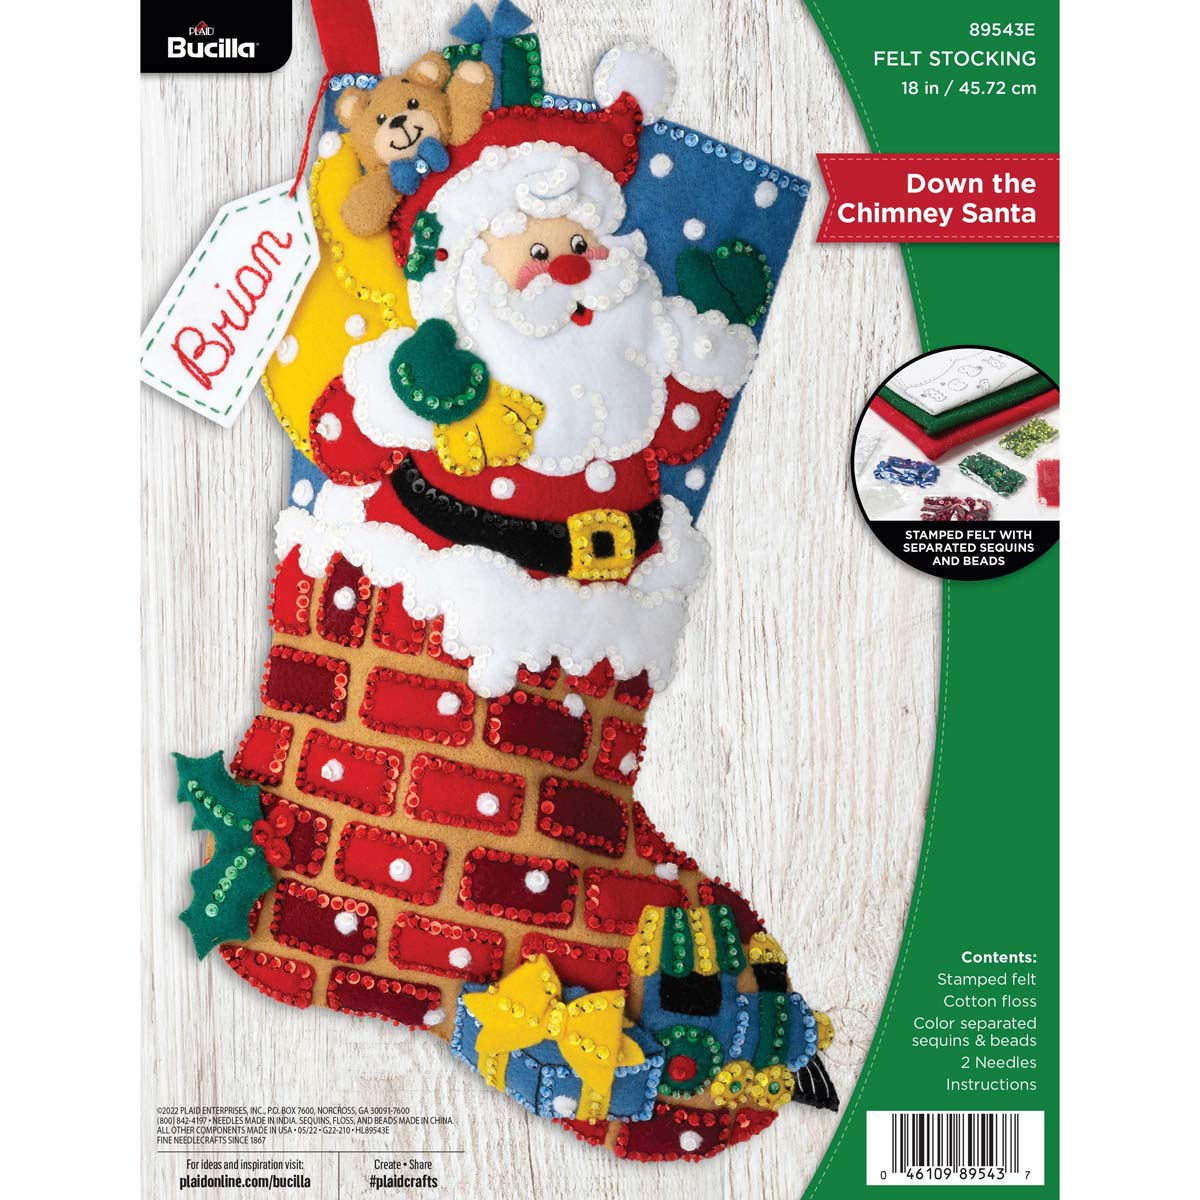 Shop Plaid Bucilla ® Seasonal - Felt - Stocking Kits - Elegant Patchwork -  89261E - 89261E